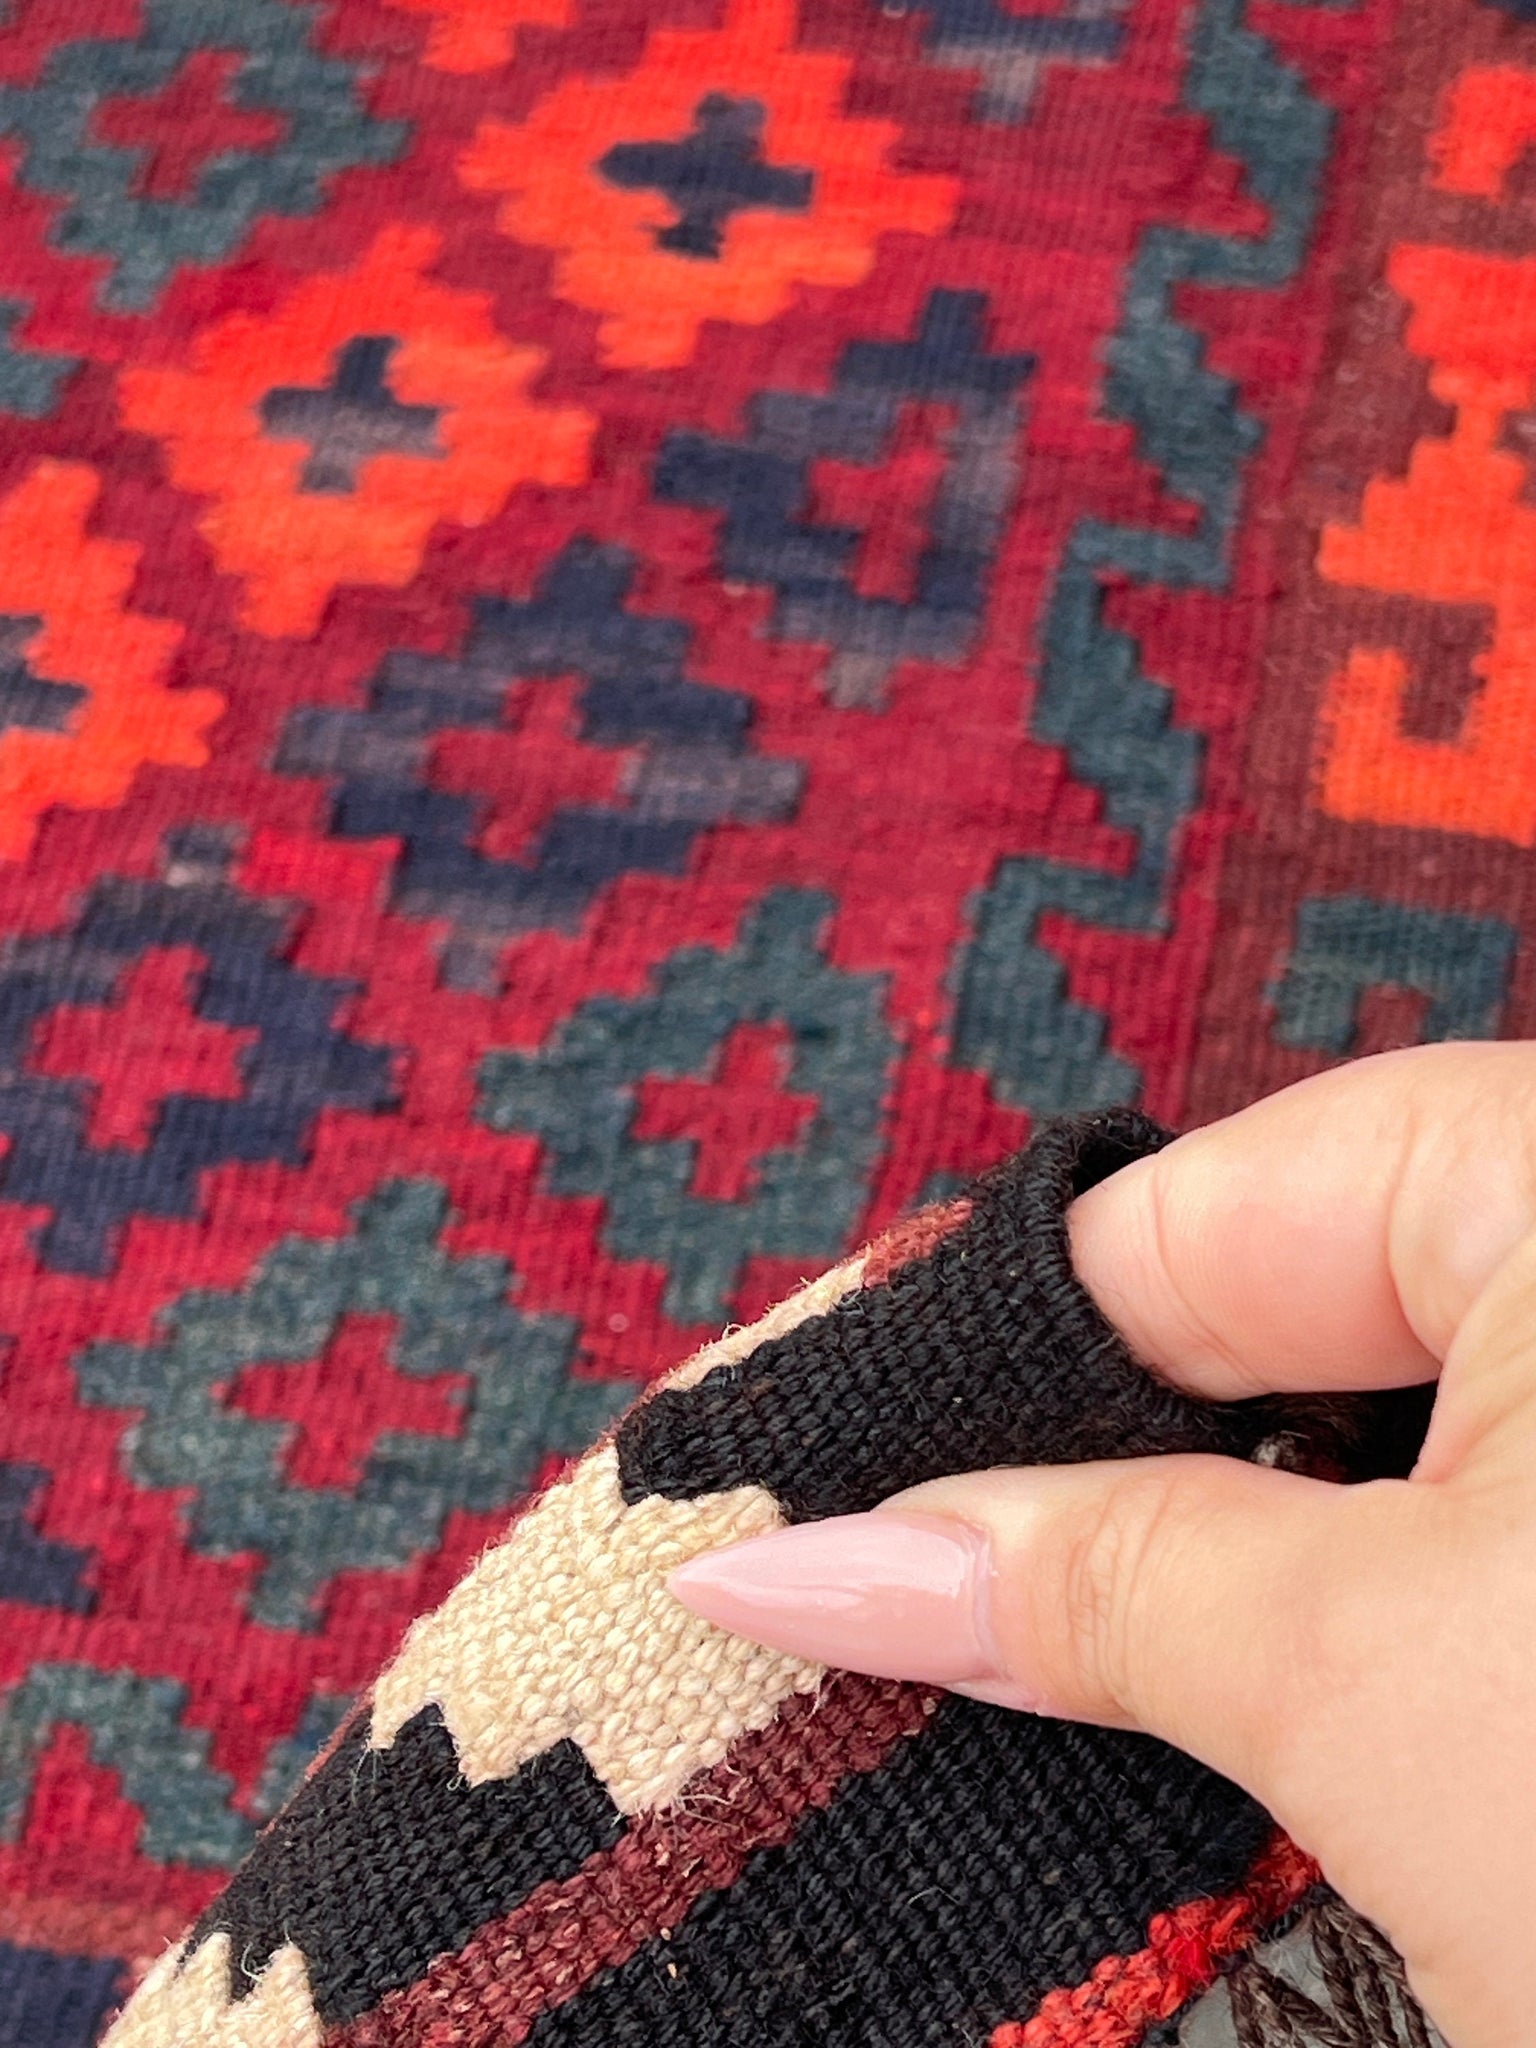 3x6 (90x180) Handmade Vintage Kilim Afghan Rug | Brick Scarlet Red Midnight Blue Black Cream Beige | Hand Knotted Geometric Bohemian Wool